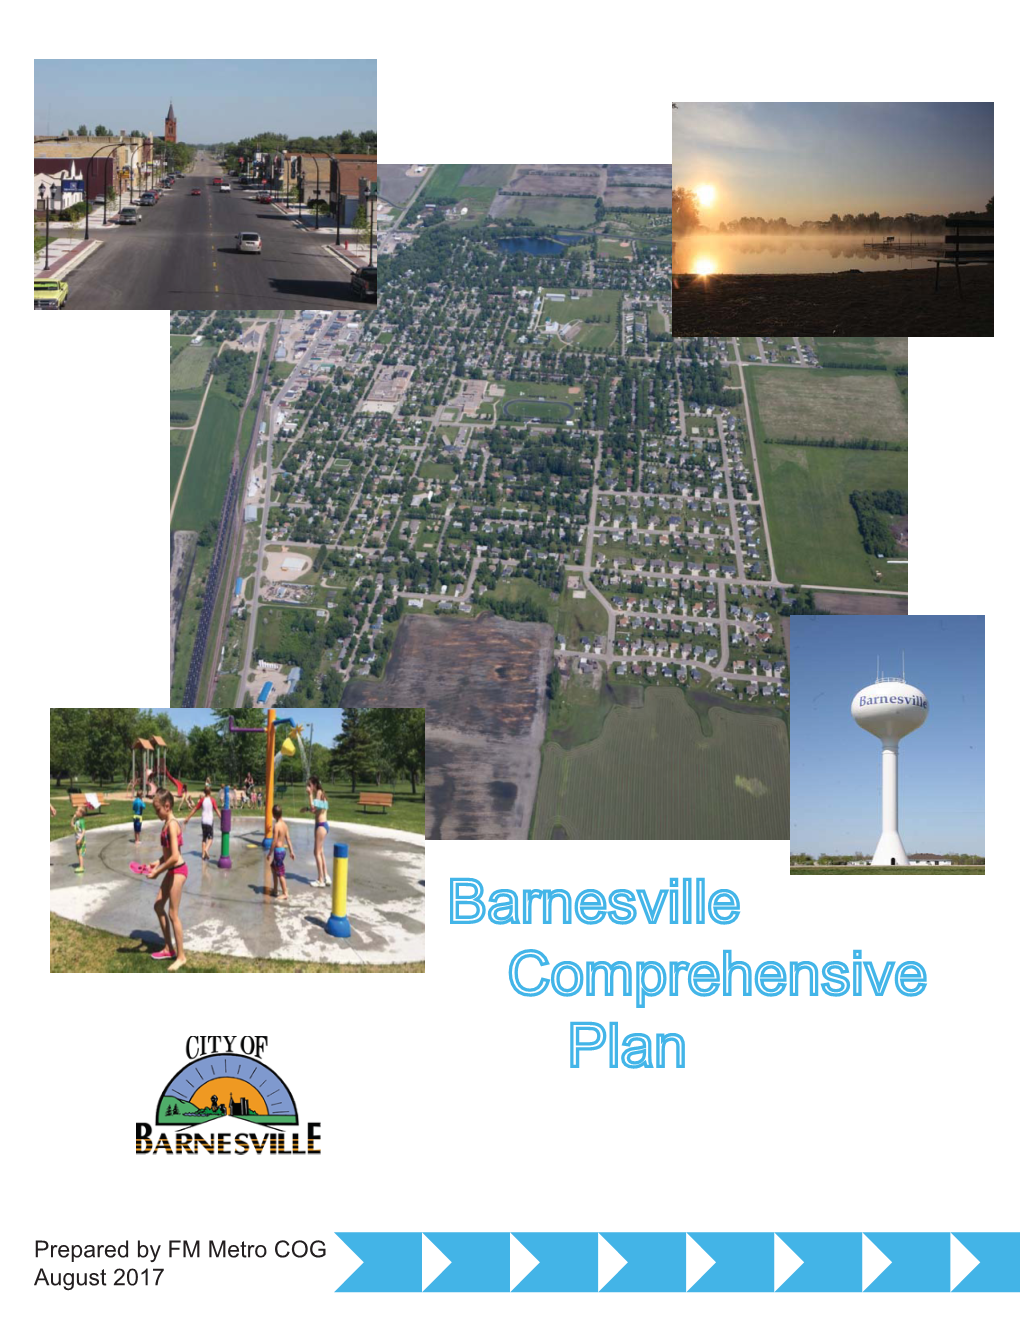 Comprehensive Plan Fargo-Moorhead Metropolitan Council of Governments - UPWP 603.01 0.50.25 0 0.5 1 1.5